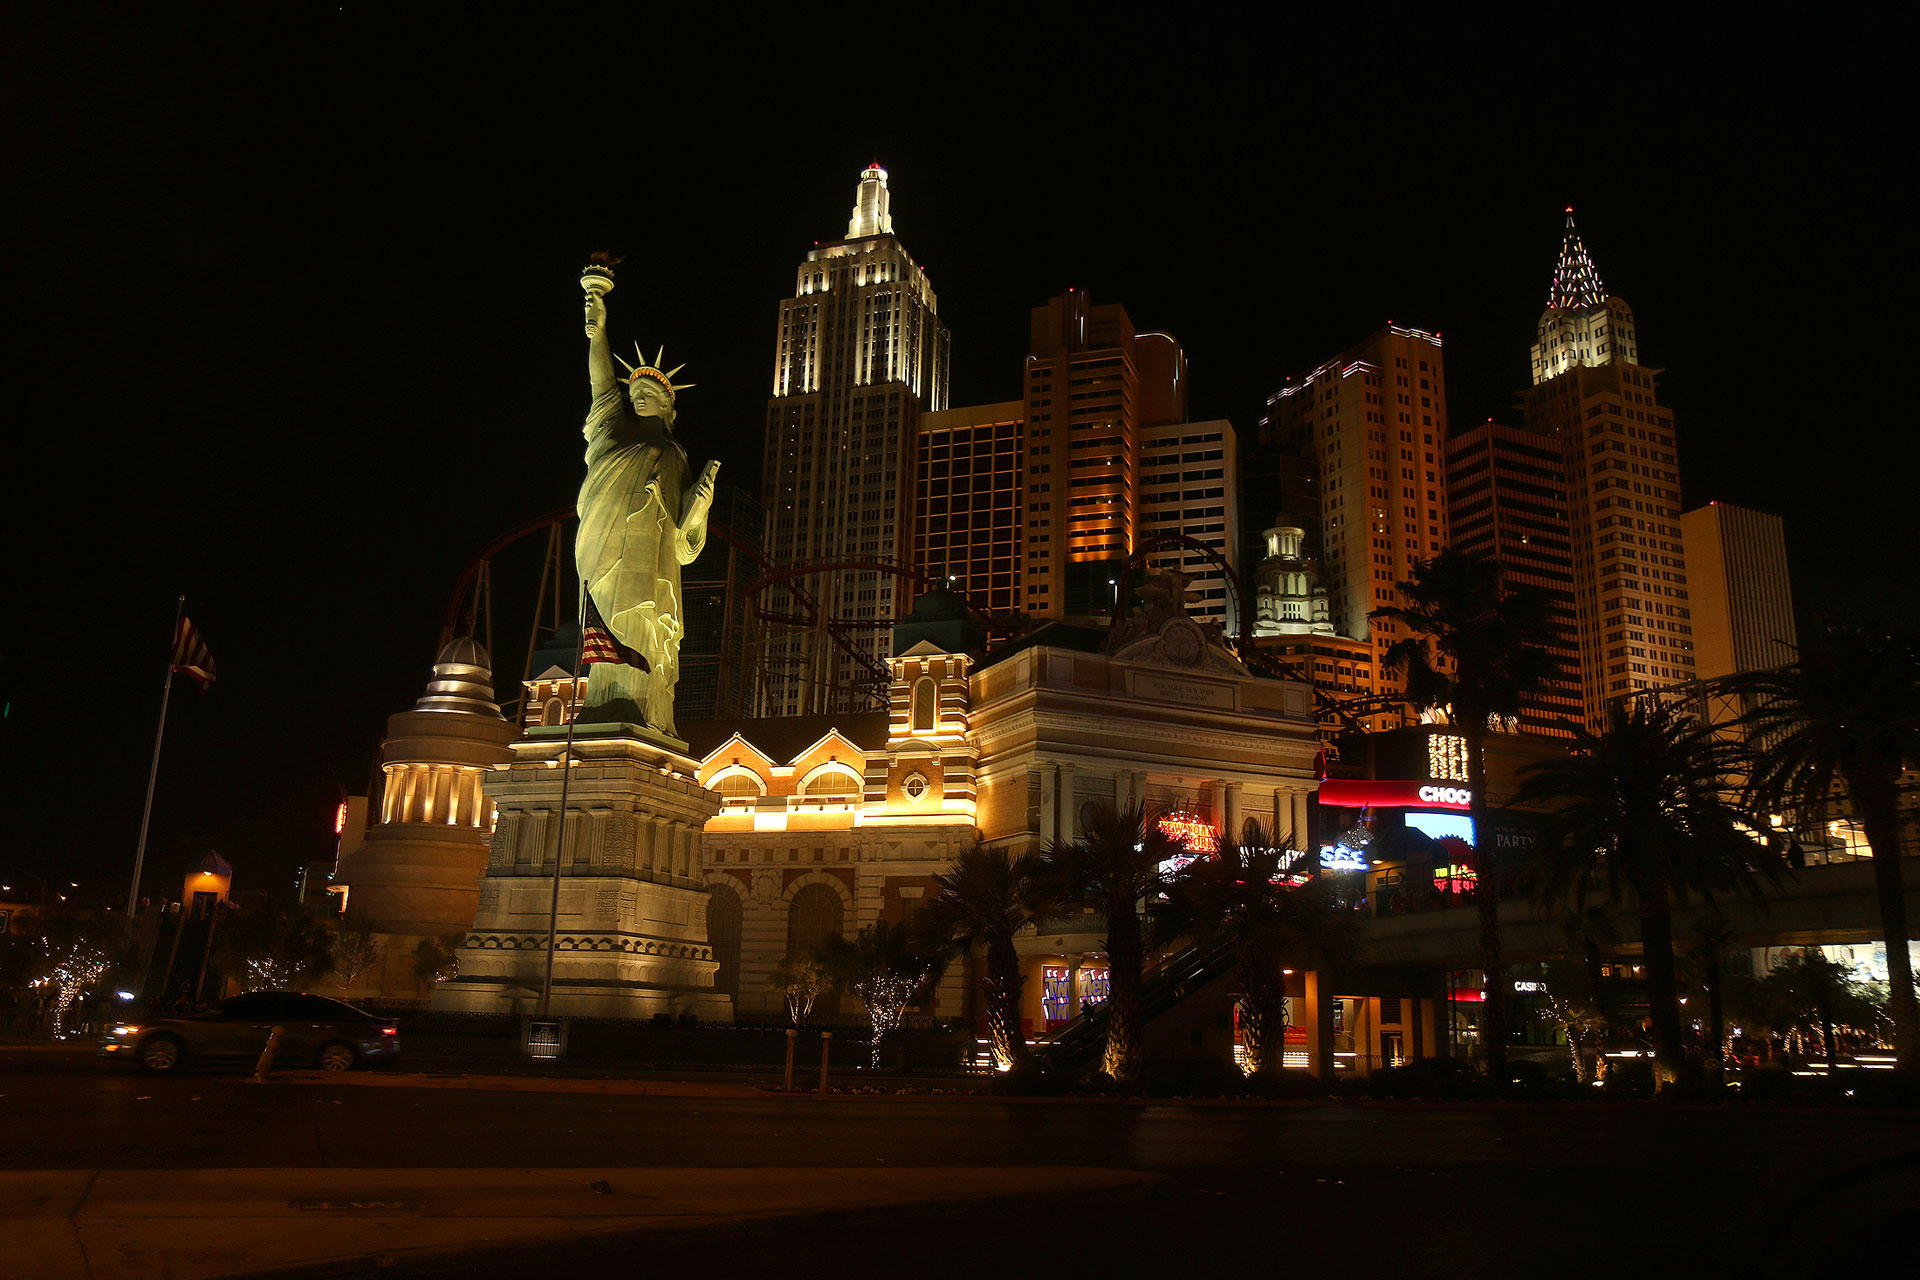 “The Strip” in Las Vegas